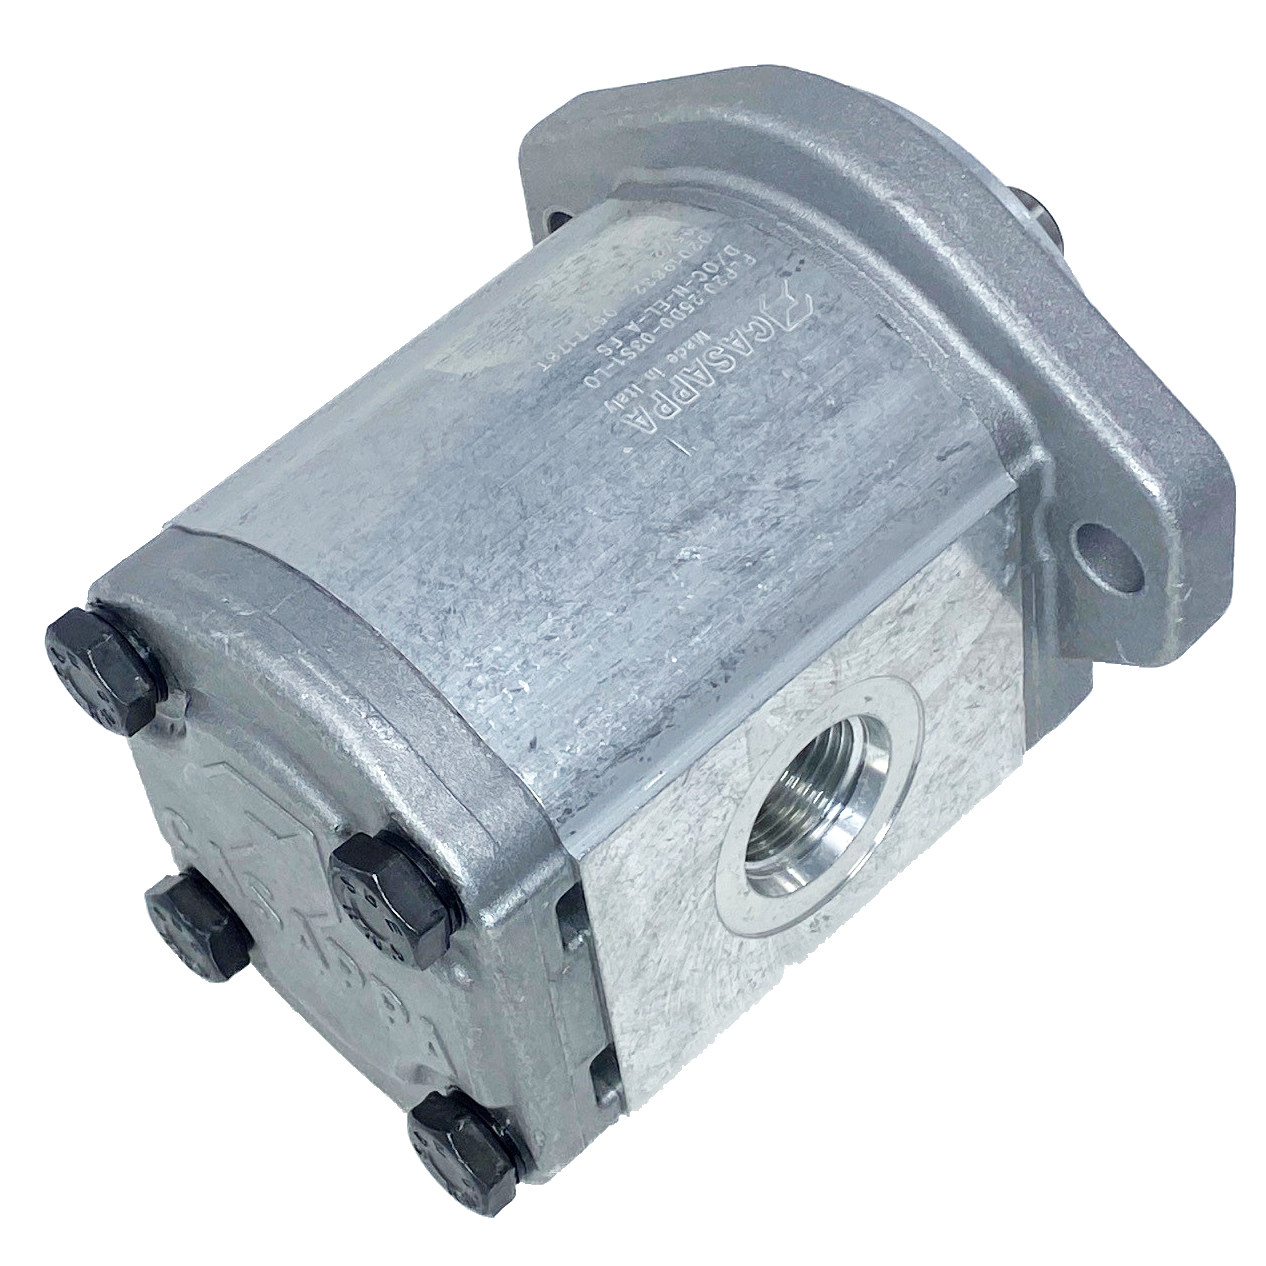 PLM20.25B0-31S1-LOC/OD-N-EL : Casappa Polaris Gear Motor, 26.42cc, 2465psi Rated, 3045RPM, Reversible Interior Drain, 5/8" Bore x 5/32" Key Shaft, SAE A 2-Bolt Flange, 0.625 (5/8") #10 SAE Inlet, 0.75 (3/4") #12 SAE Outlet, Aluminum Body & Flange